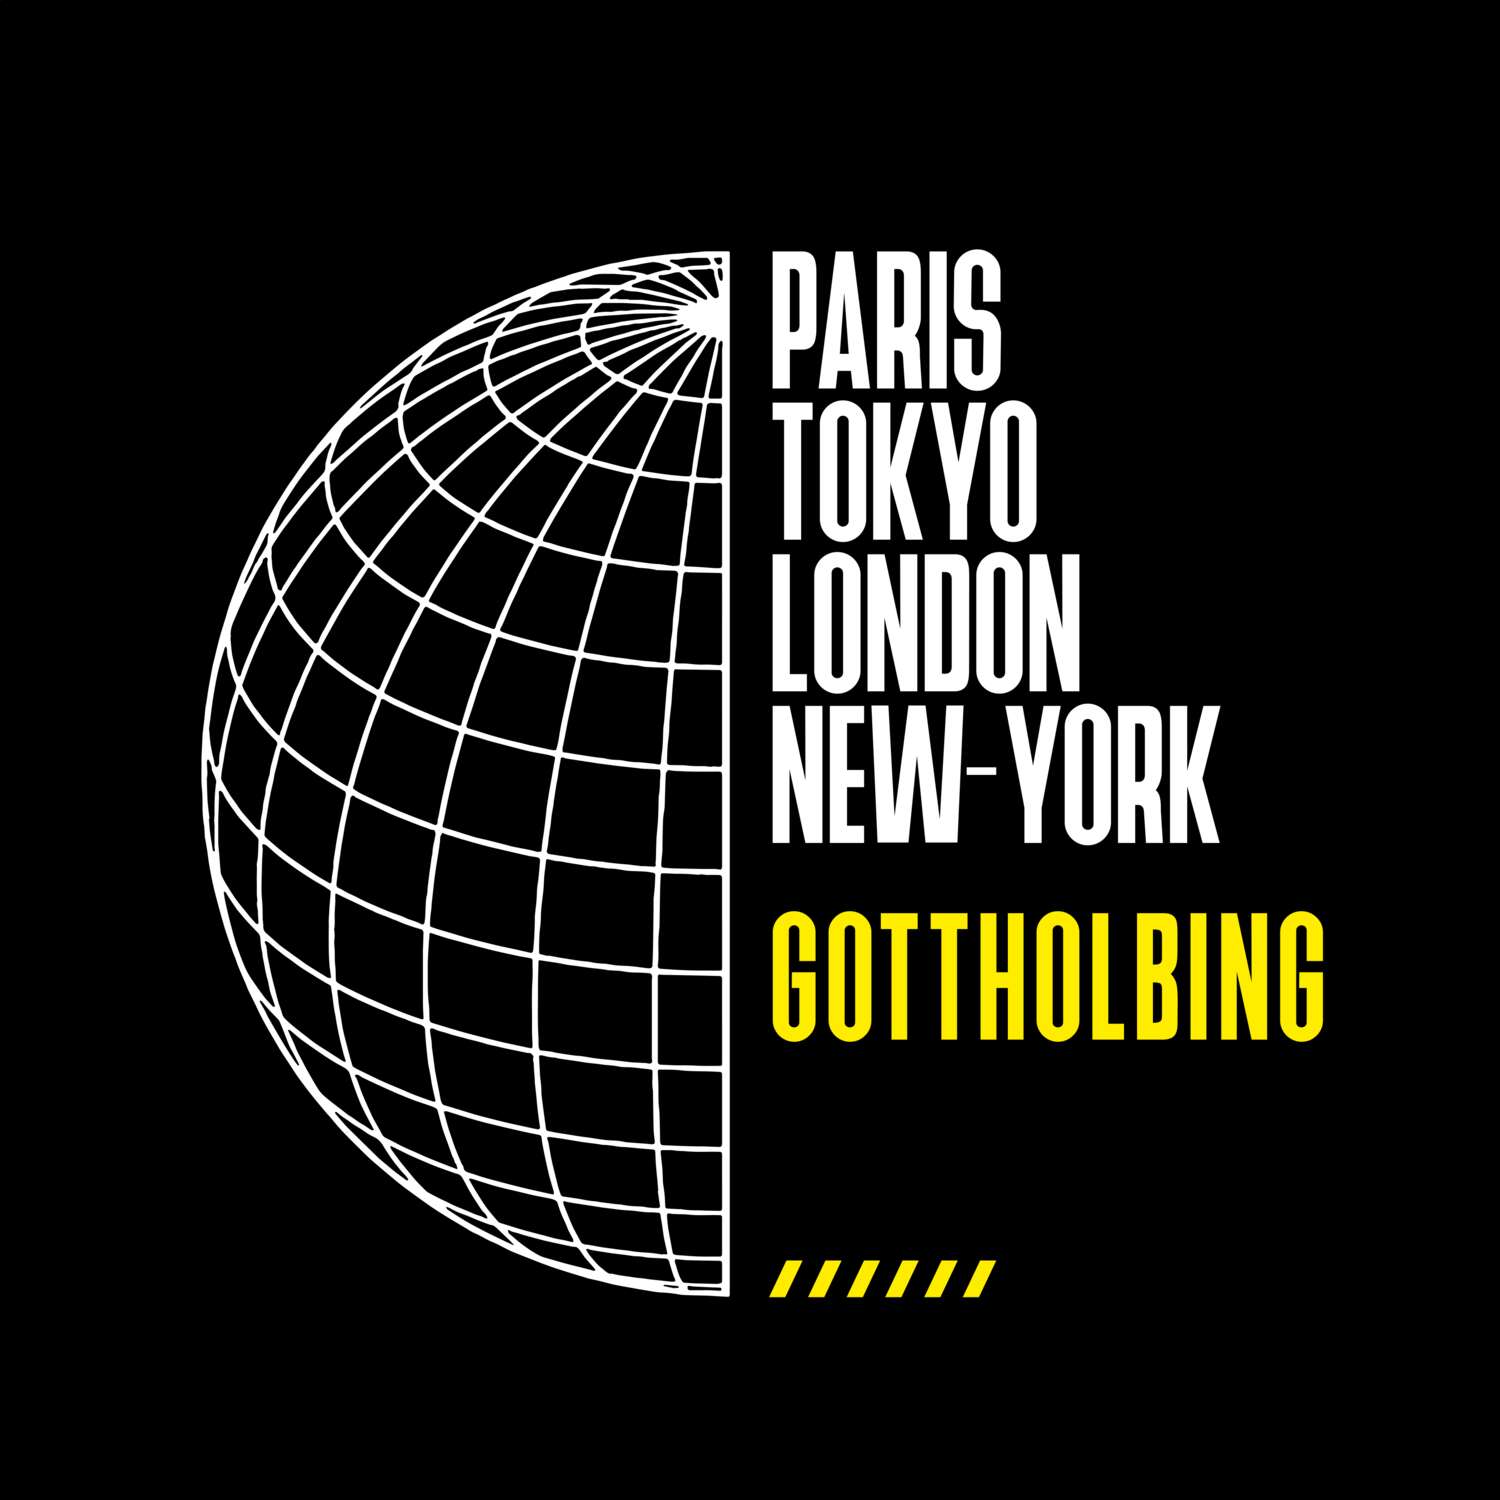 Gottholbing T-Shirt »Paris Tokyo London«